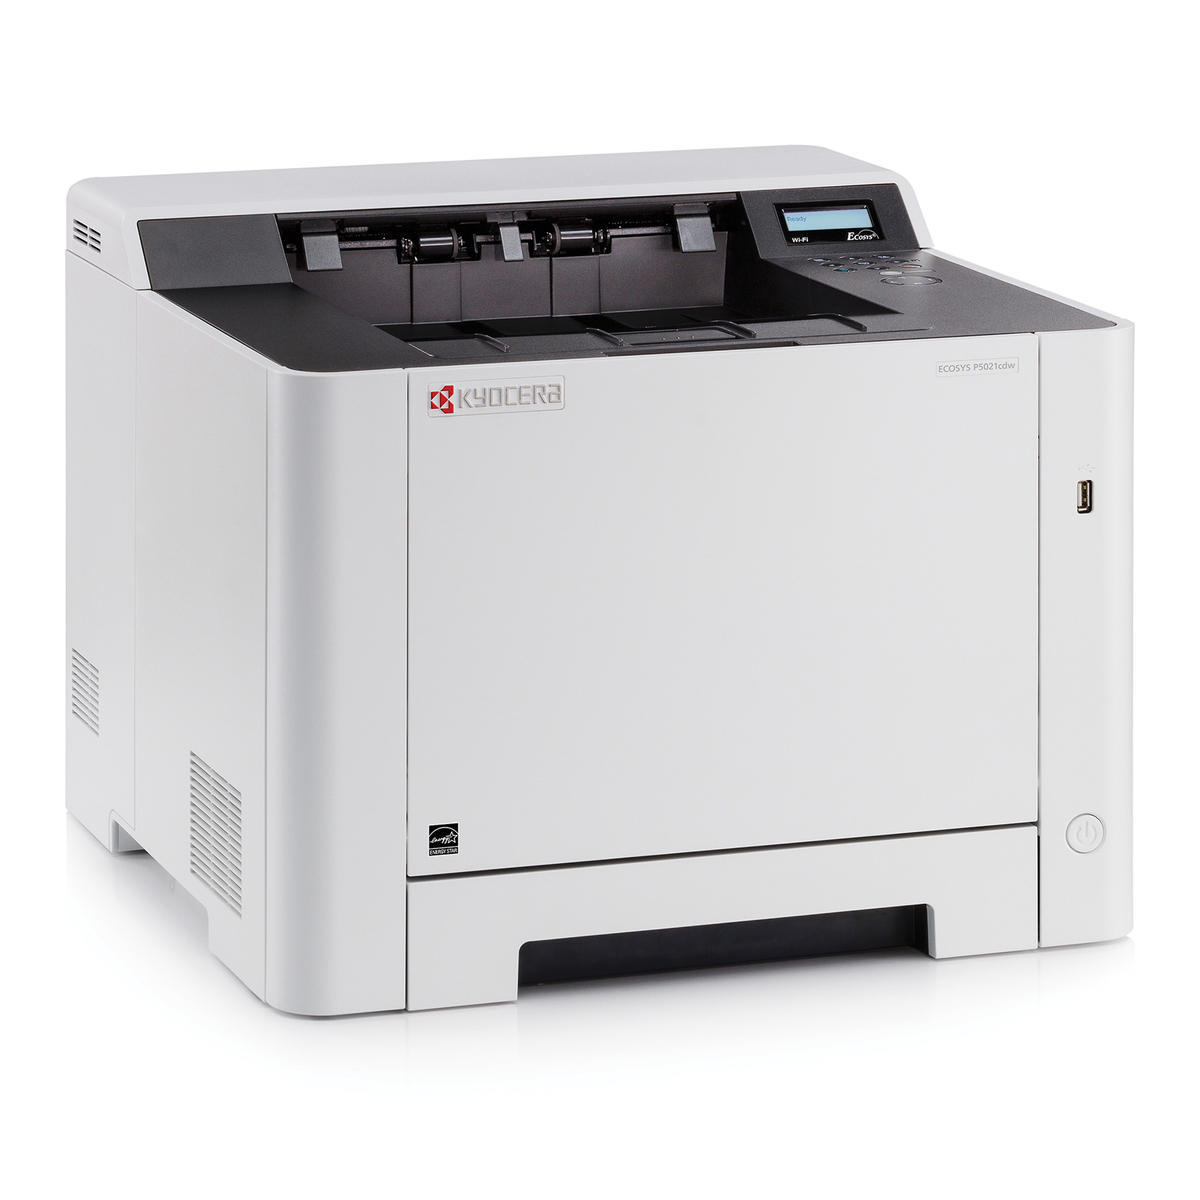 Kyocera ECOSYS P5021cdw Printer